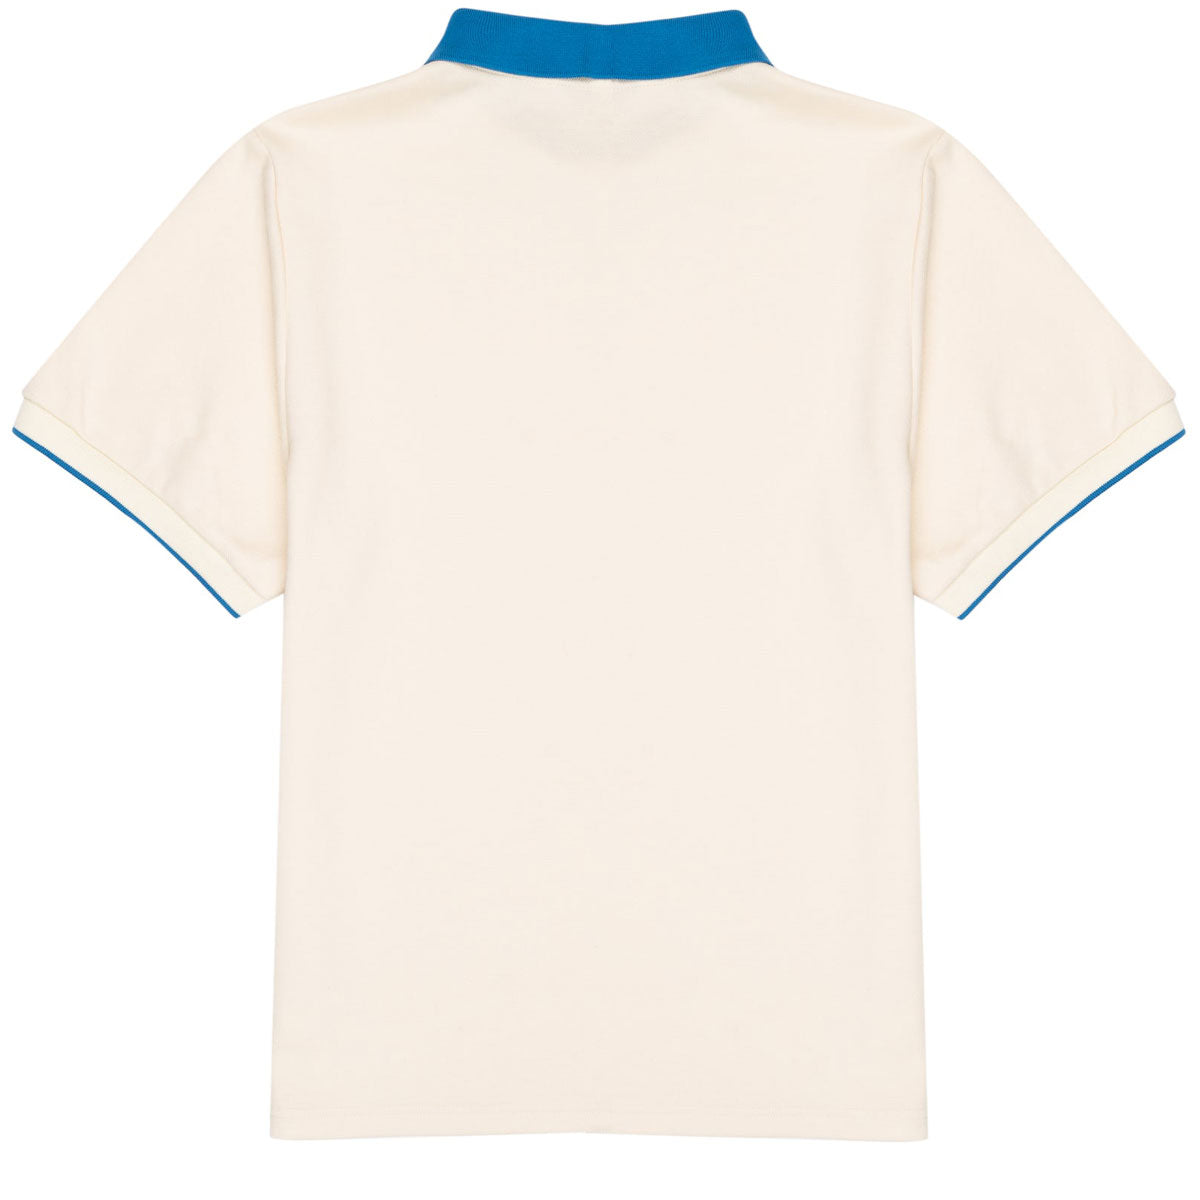 Poler Hortons Polo Shirt - French Blue image 2